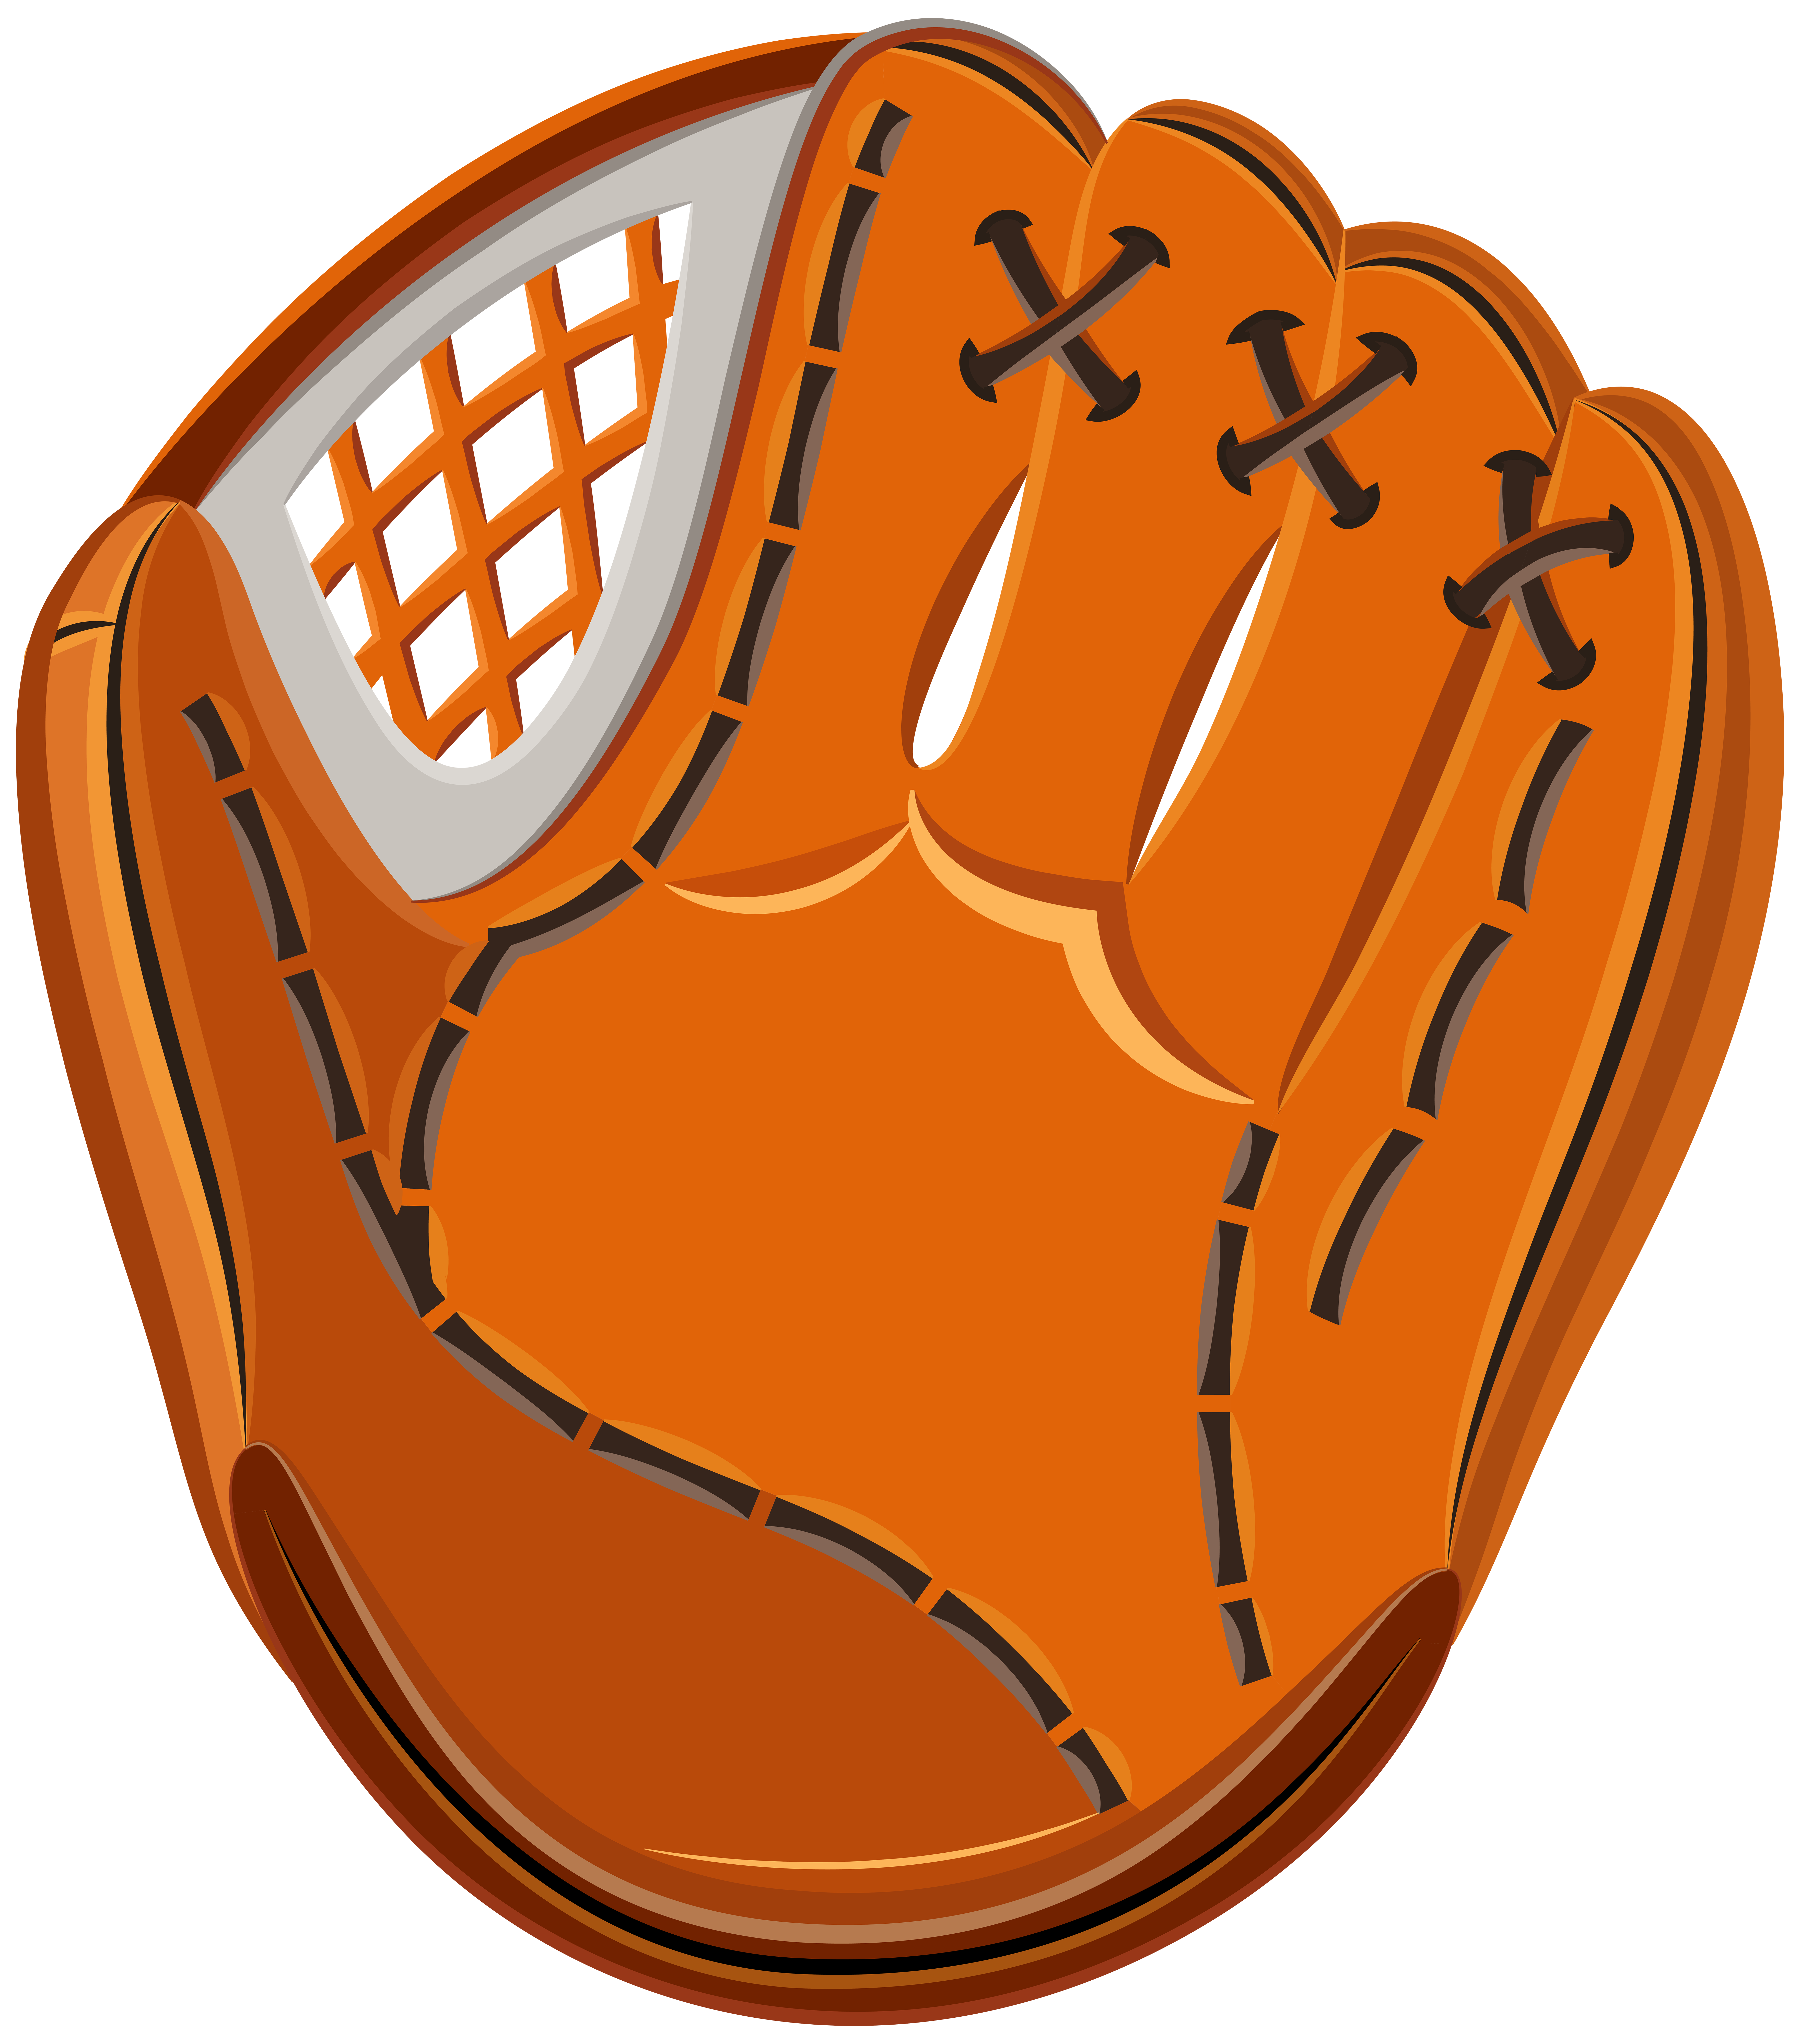 Baseball Glove PNG Clip Art Image.